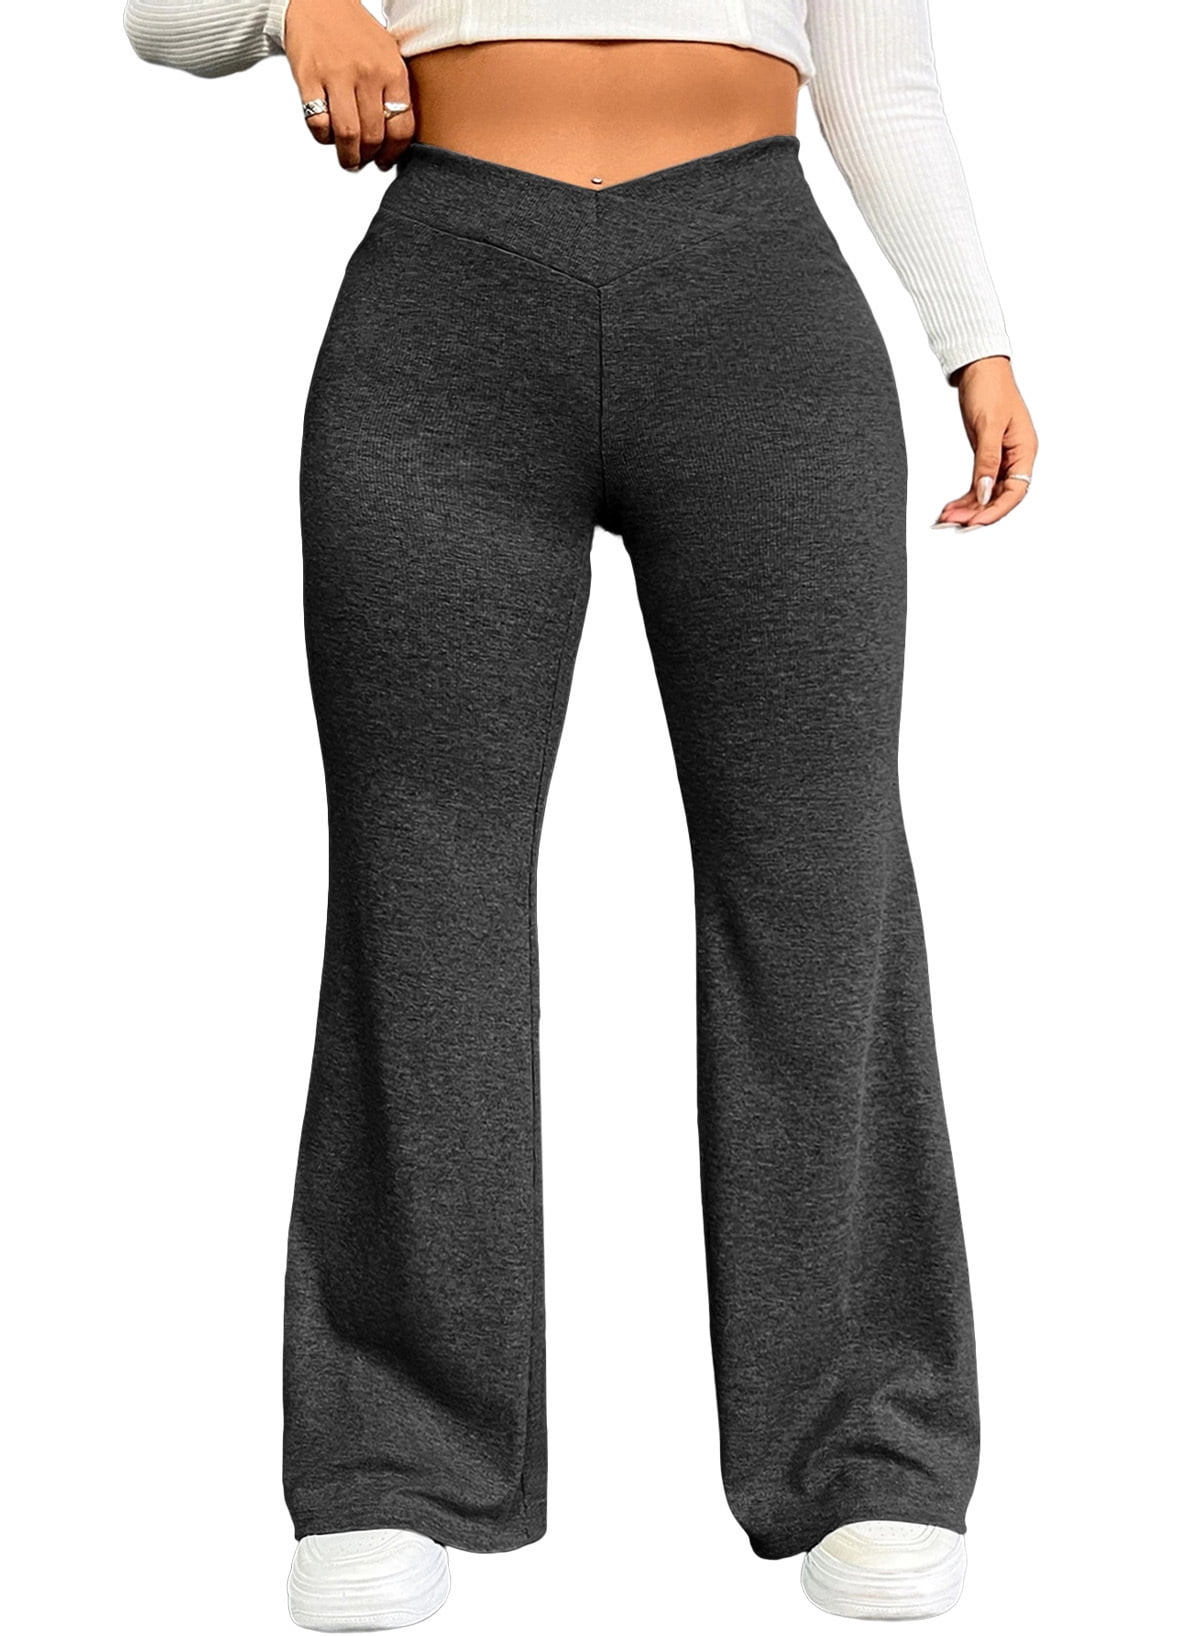 ZKESS Plus Size Legging Elastic High Waisted Crossover Flare Pants